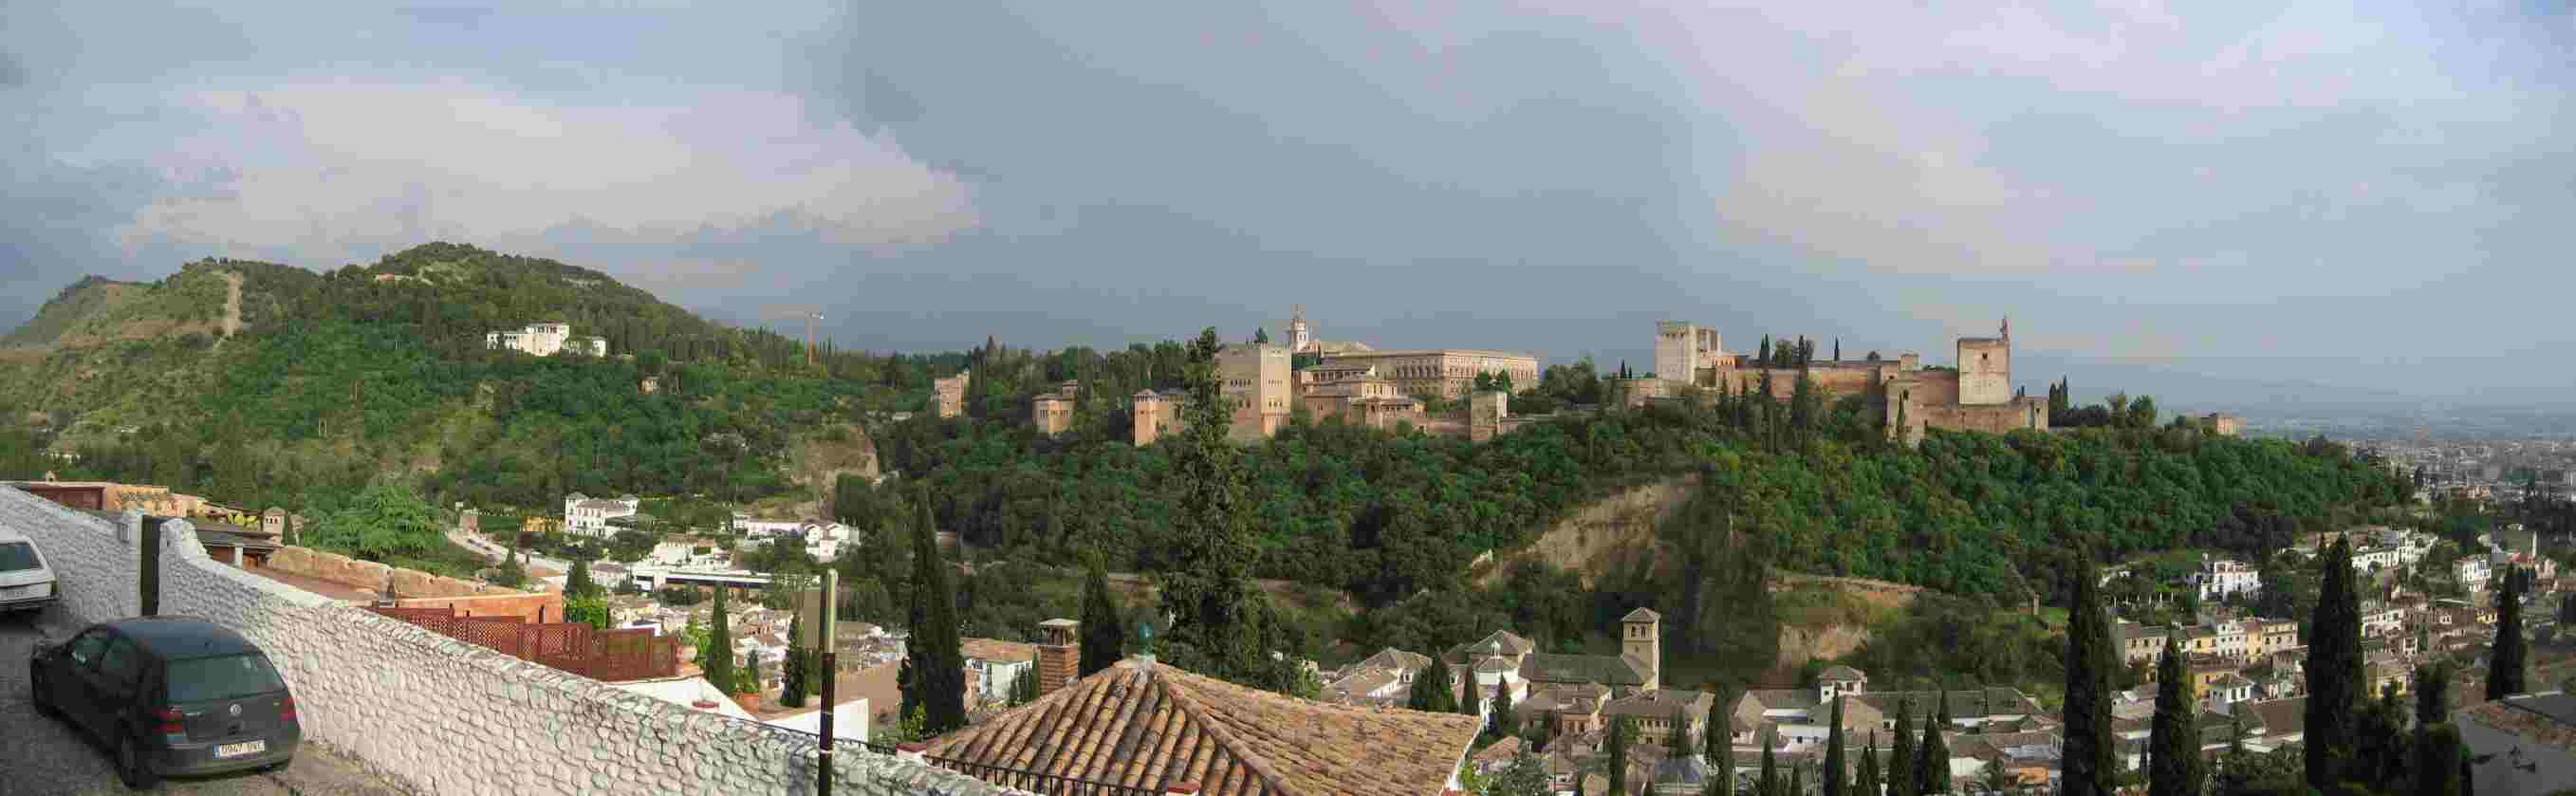 AlhambraPanorama.jpg